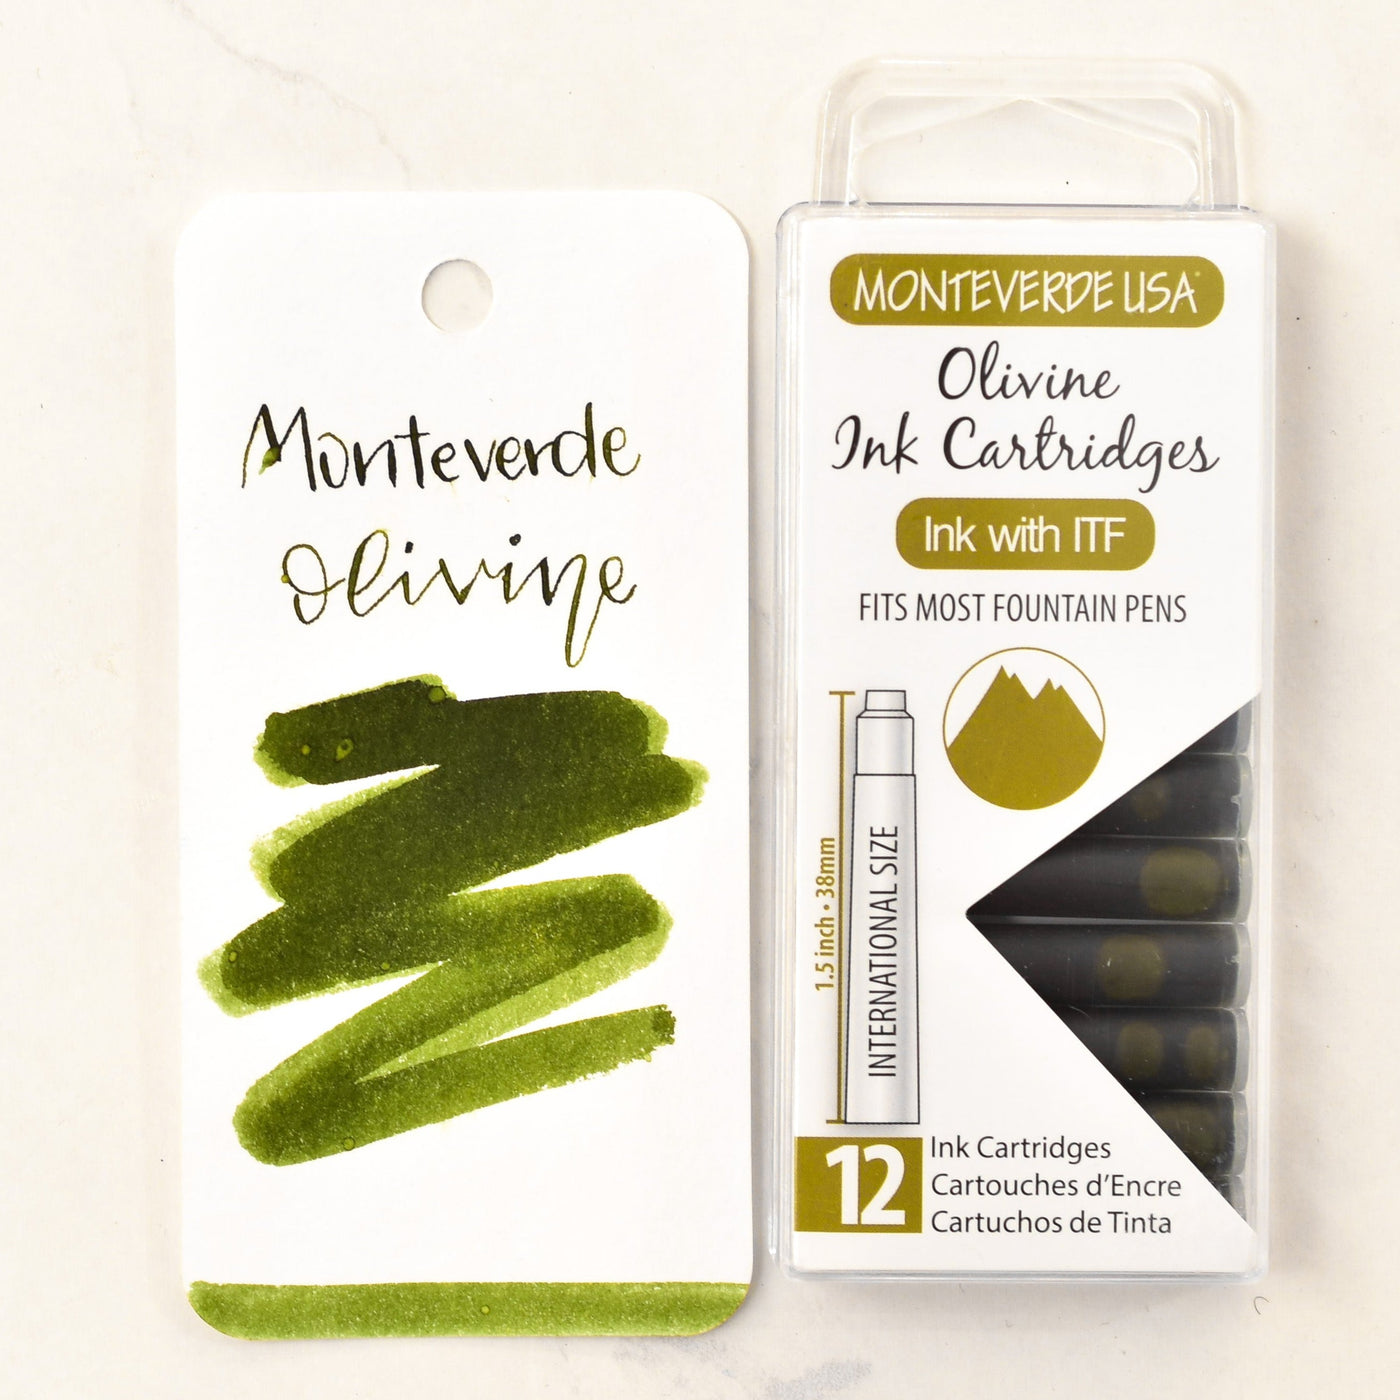 Monteverde Olivine Ink Cartridges